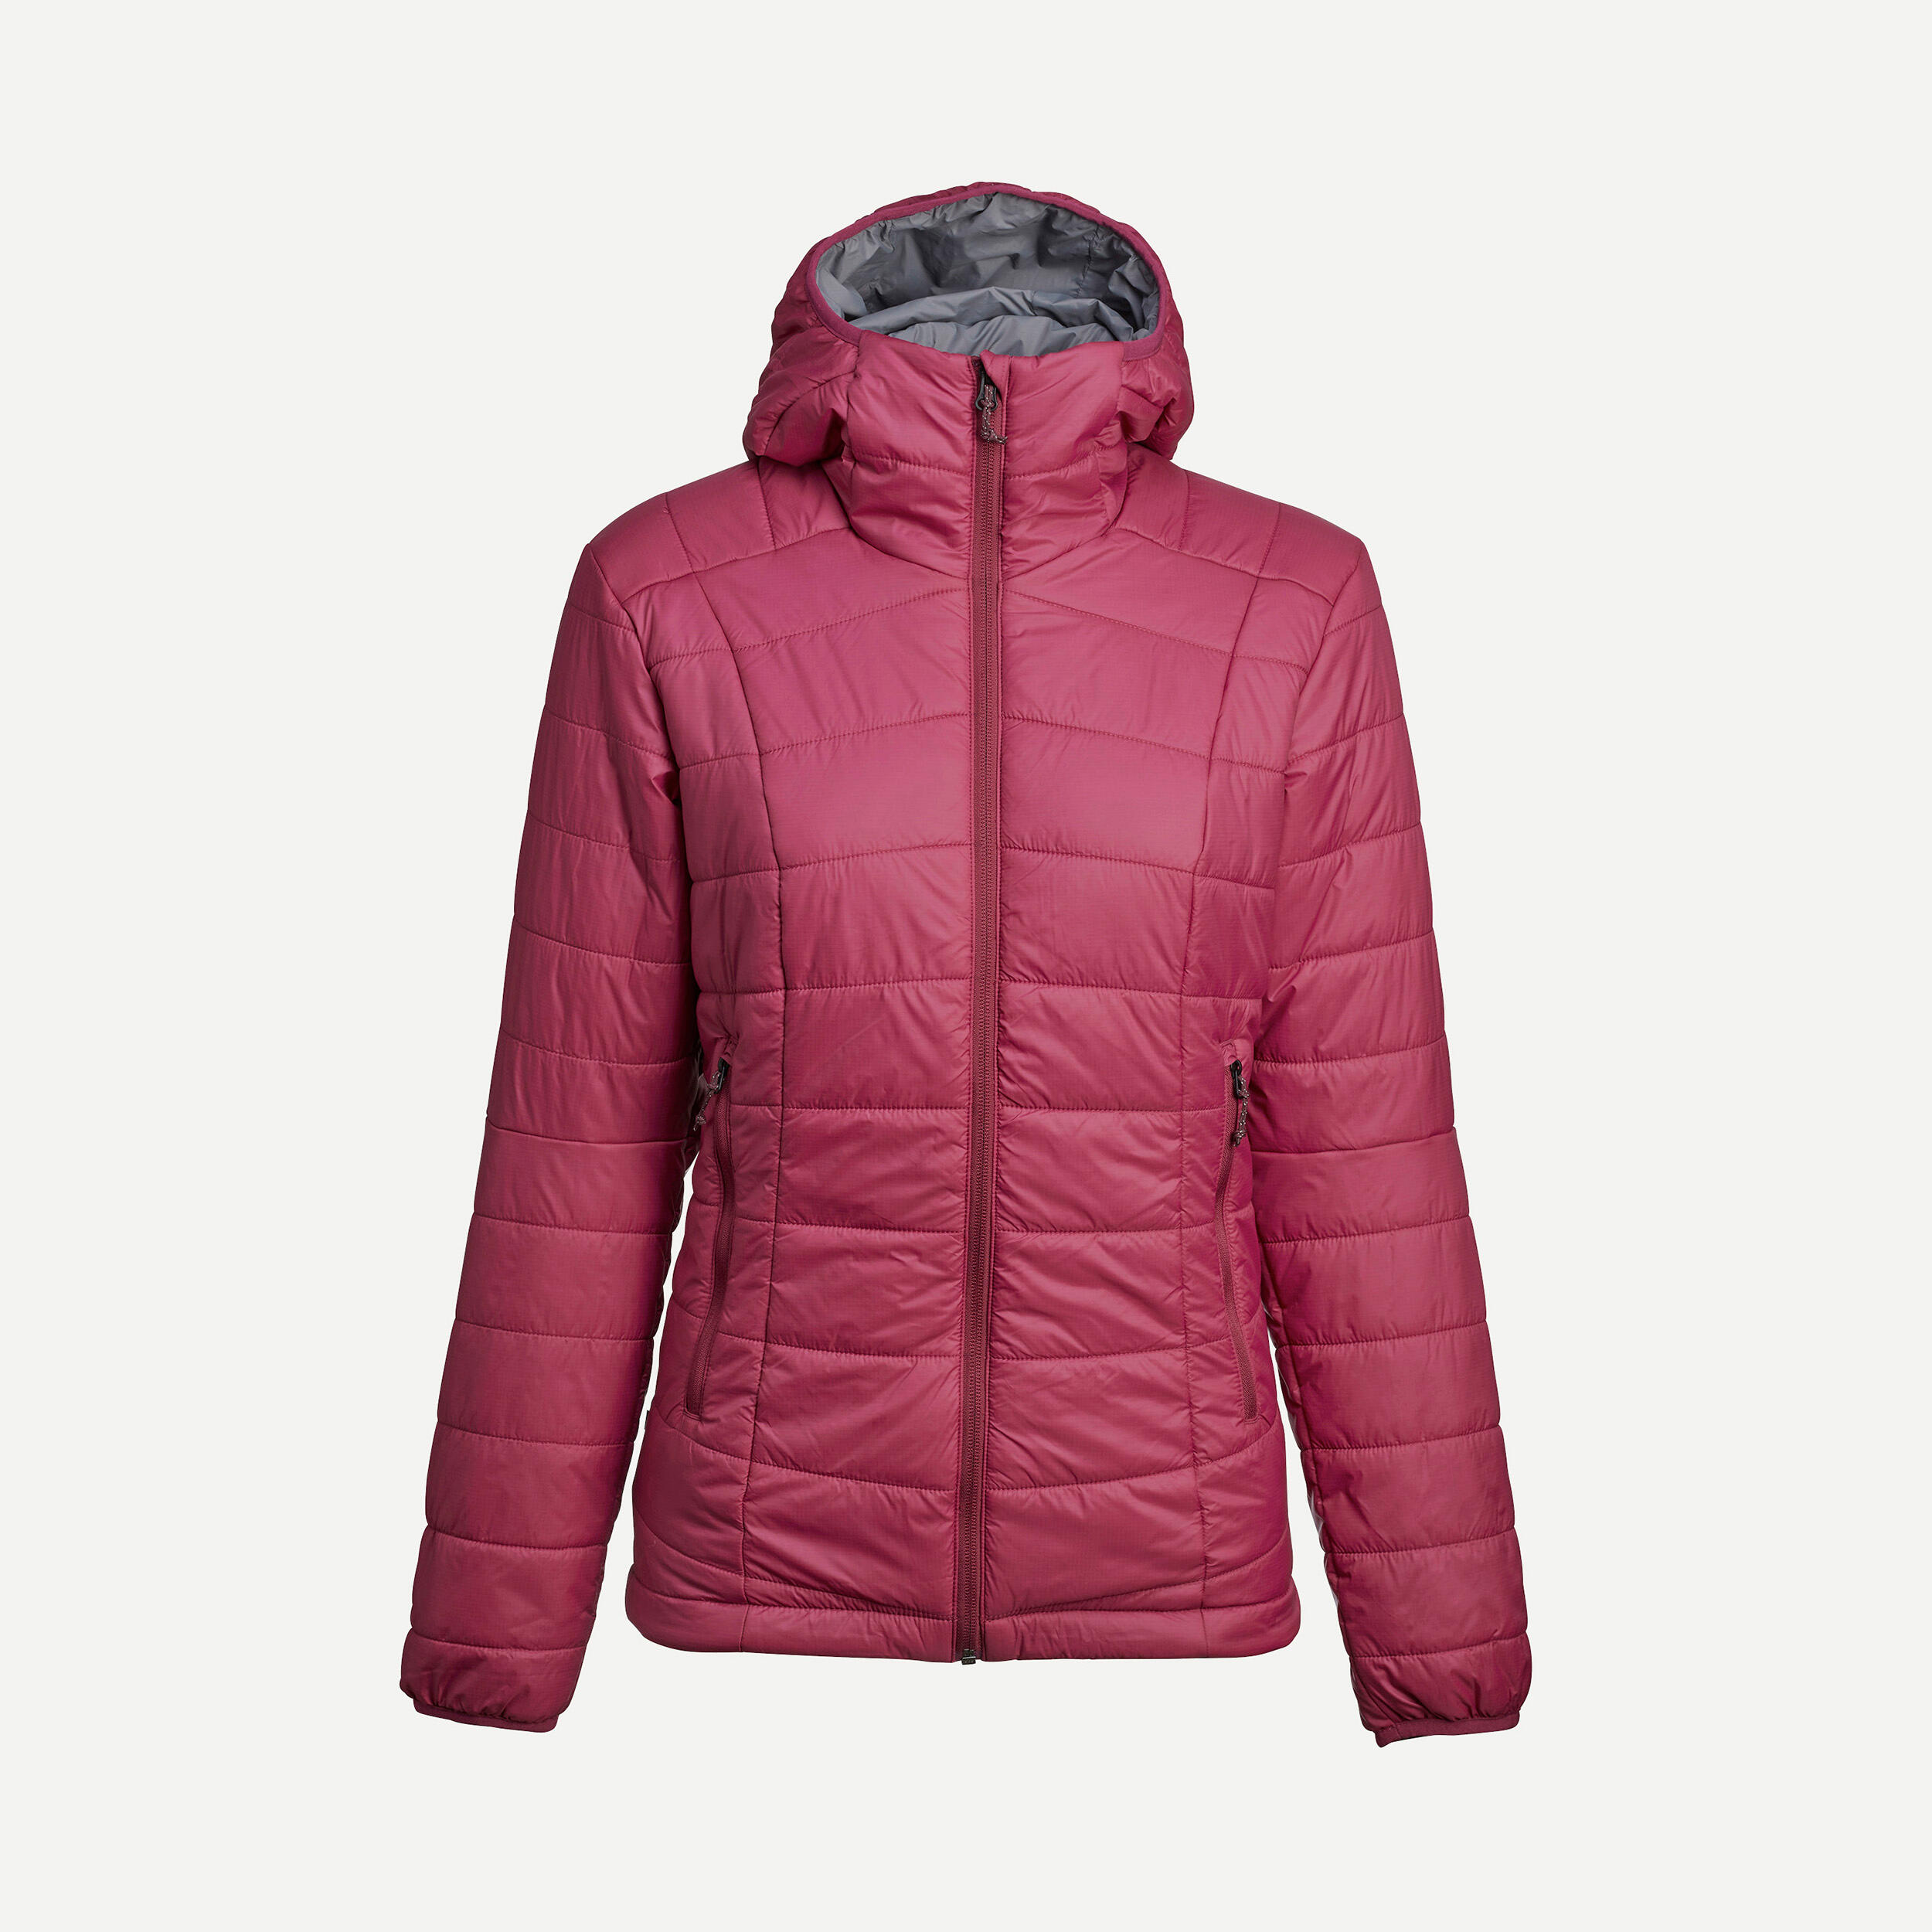 Buy Women's Trekking Padded Jacket Hooded 5°C Black Online